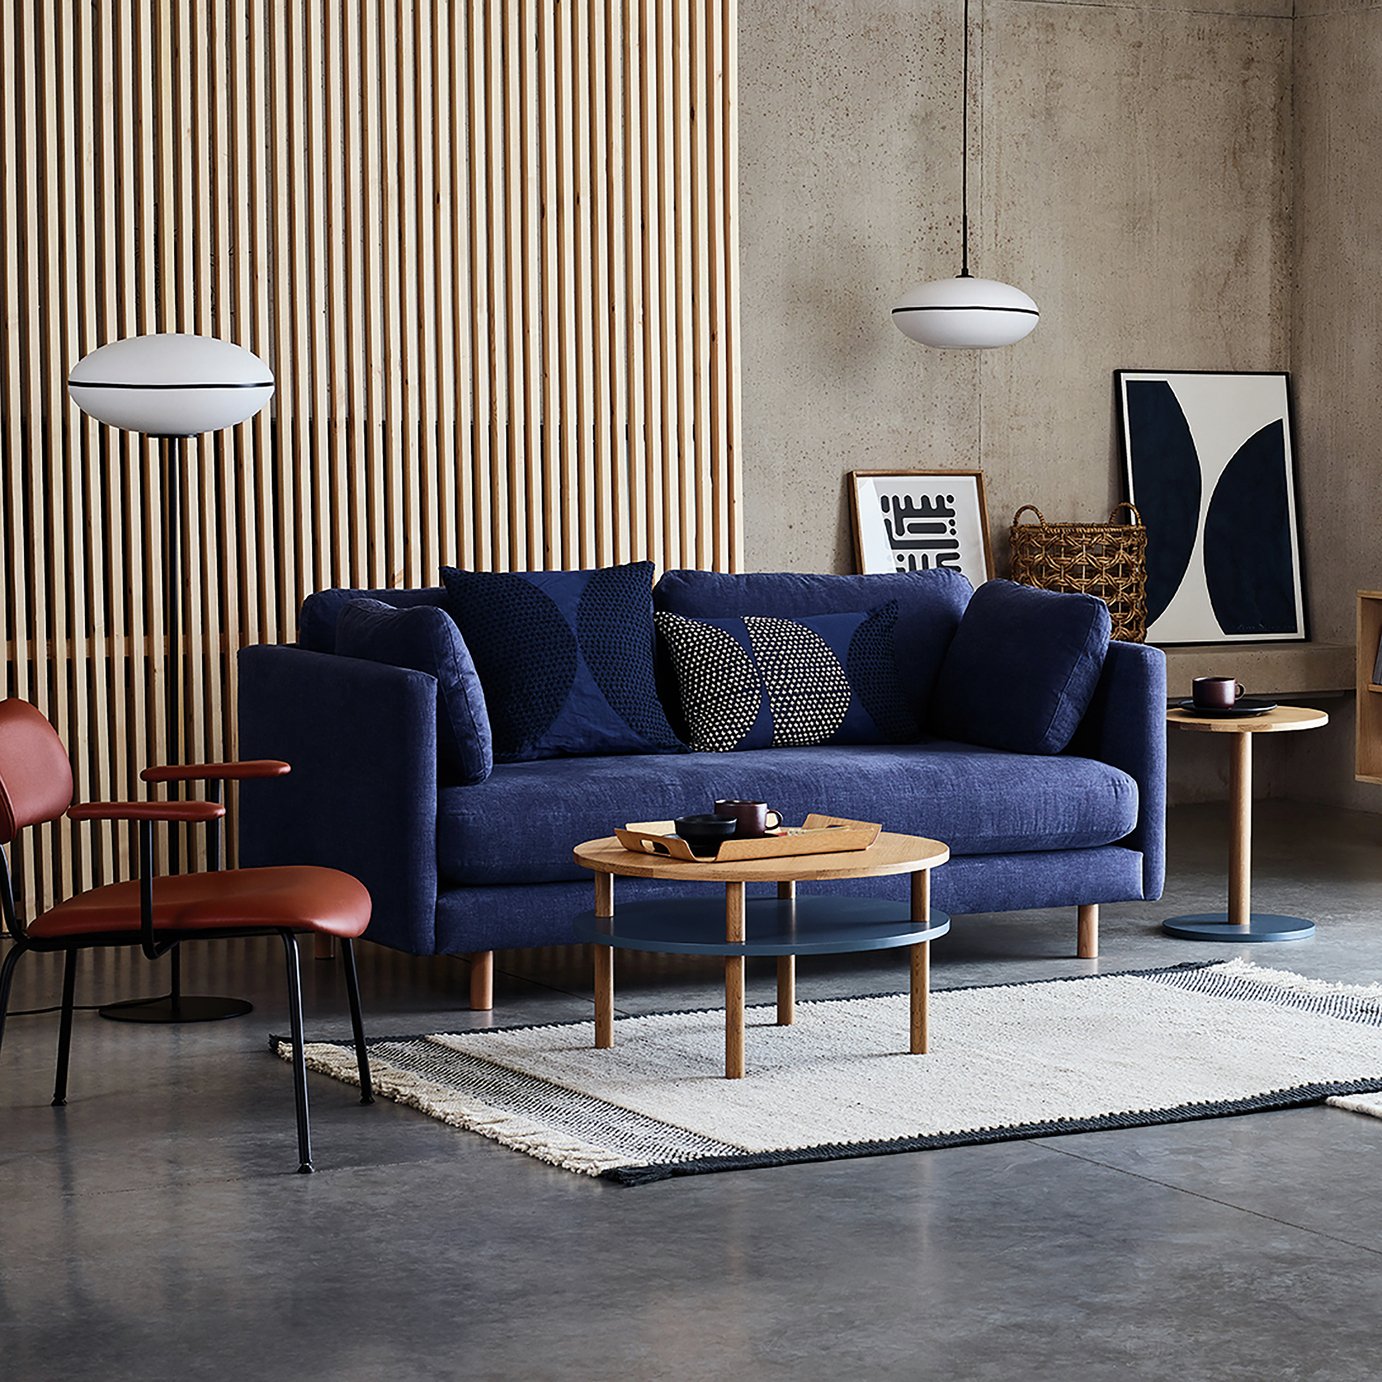 Habitat Mori 2 Seater Fabric Sofa Review